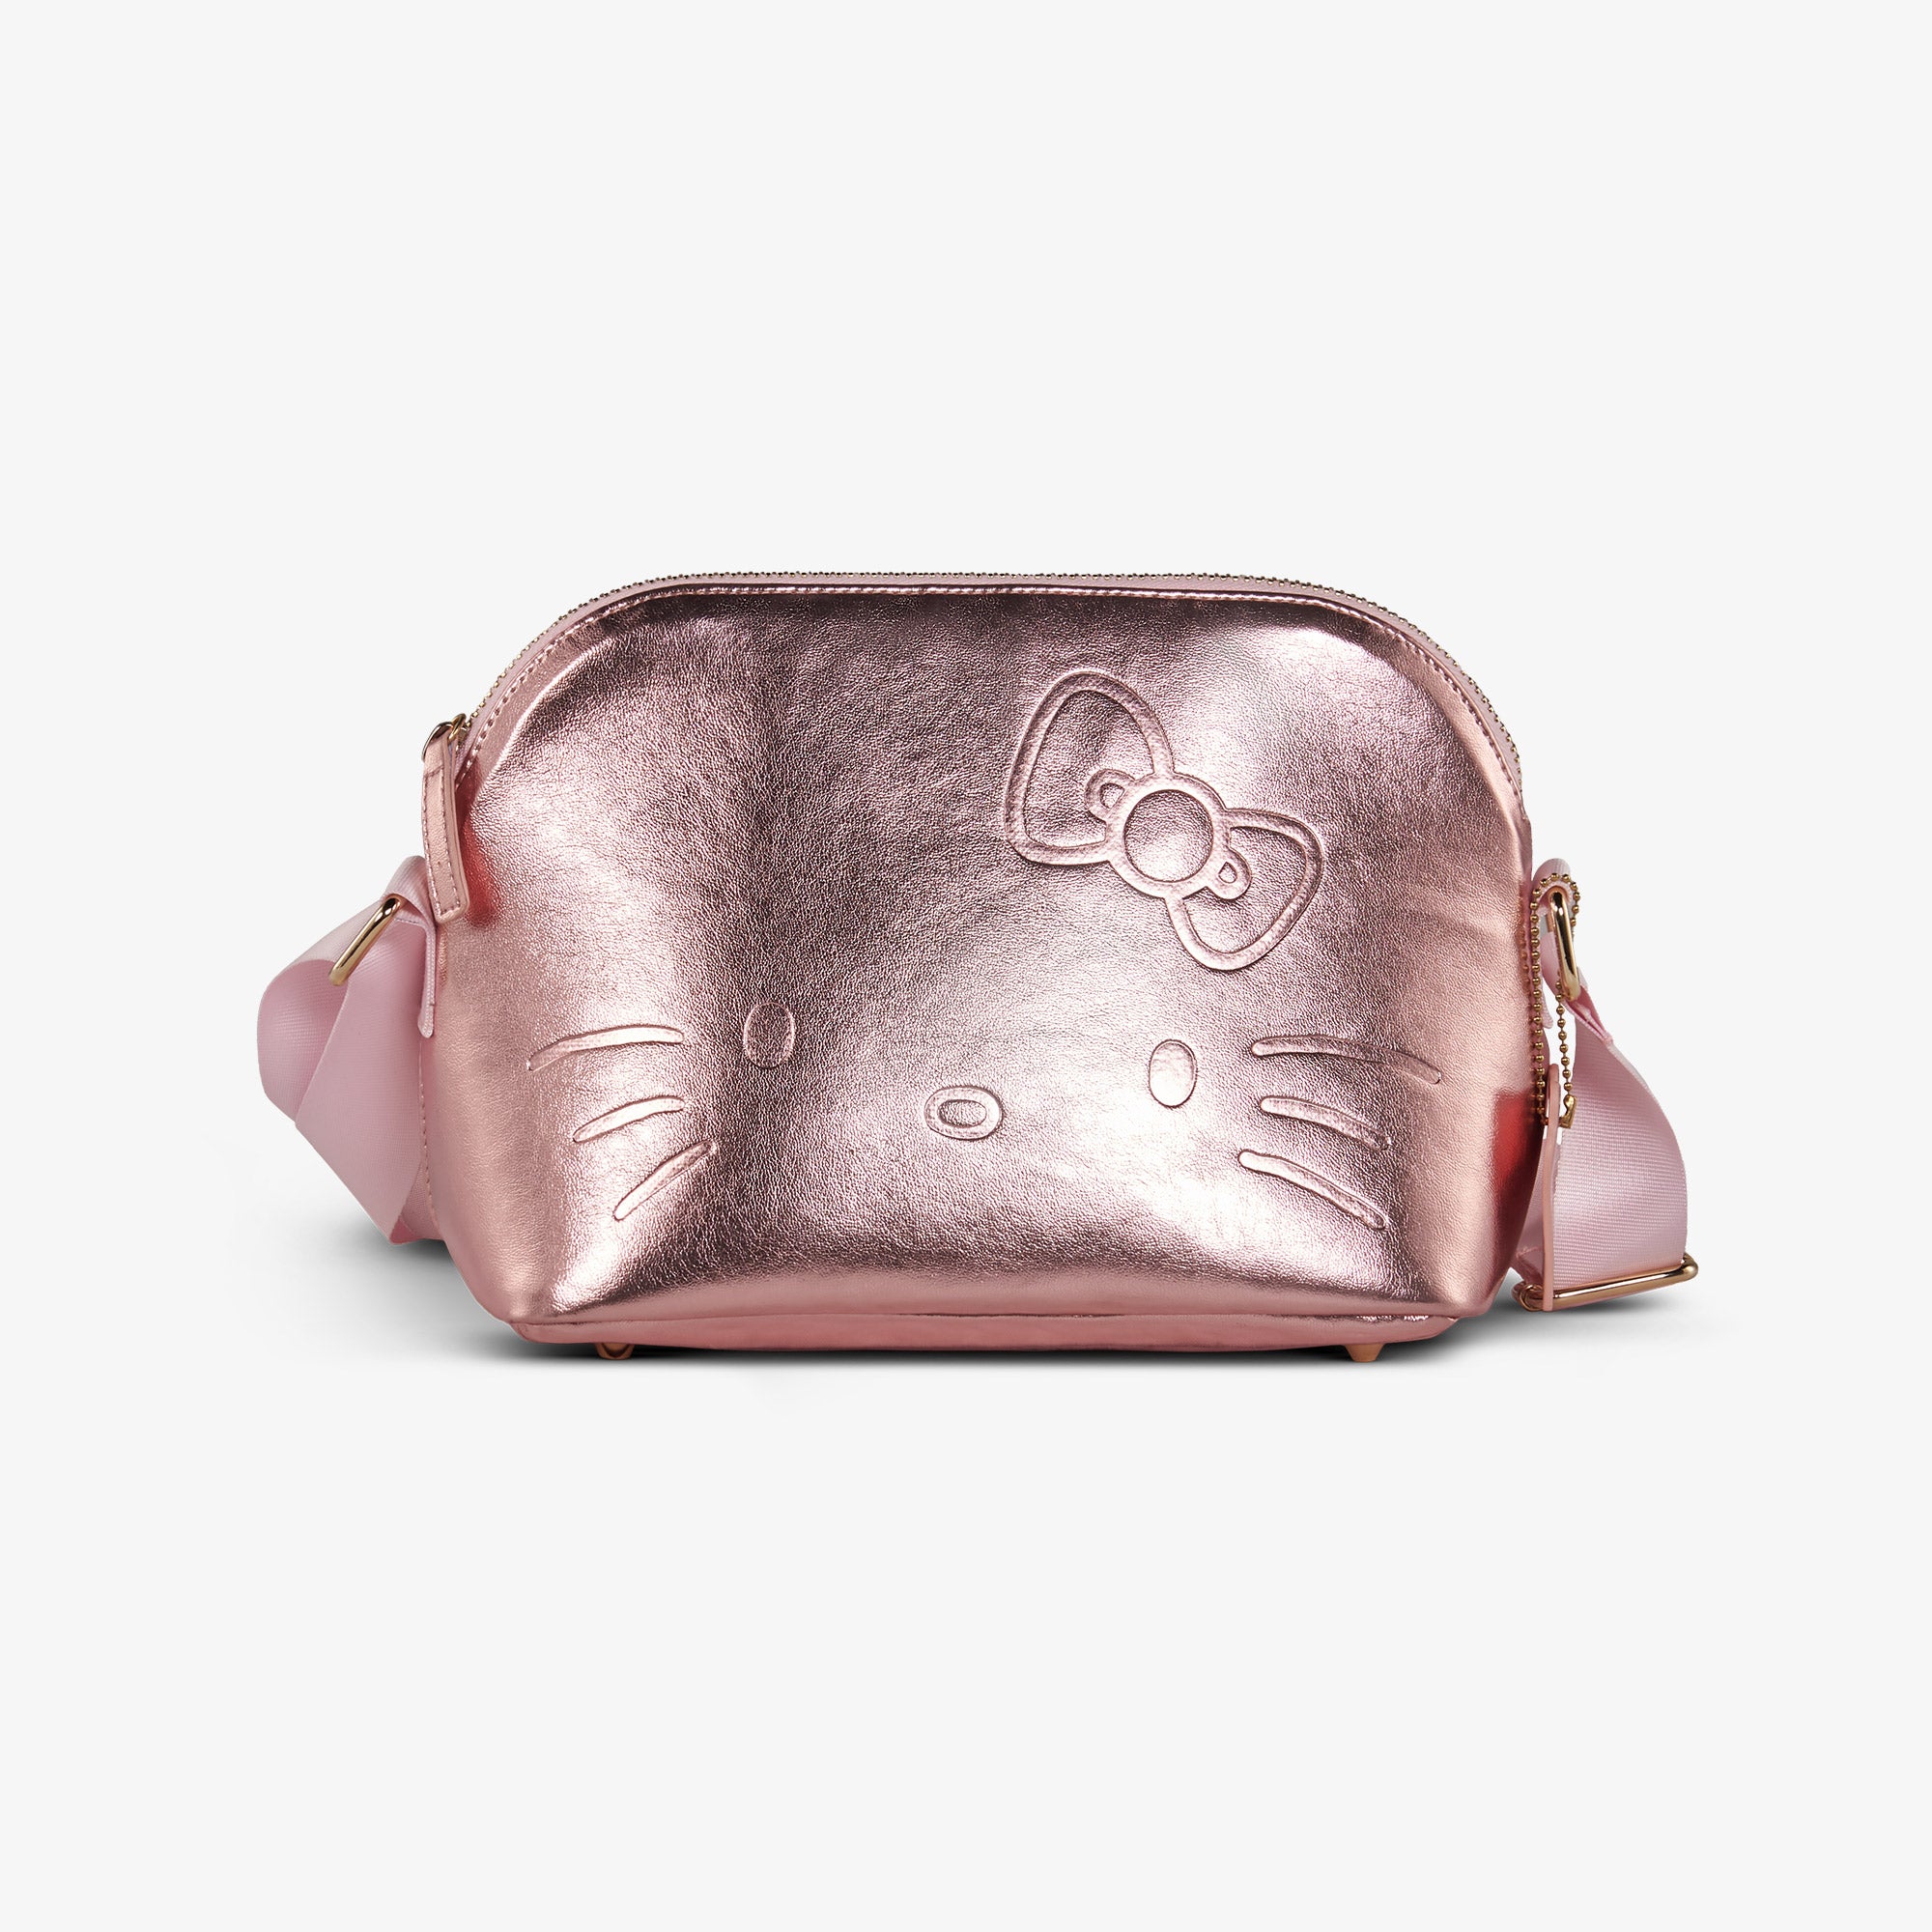 Hello Kitty Tote Bag Limited Edition Sanrio Cute Girl Handbag x